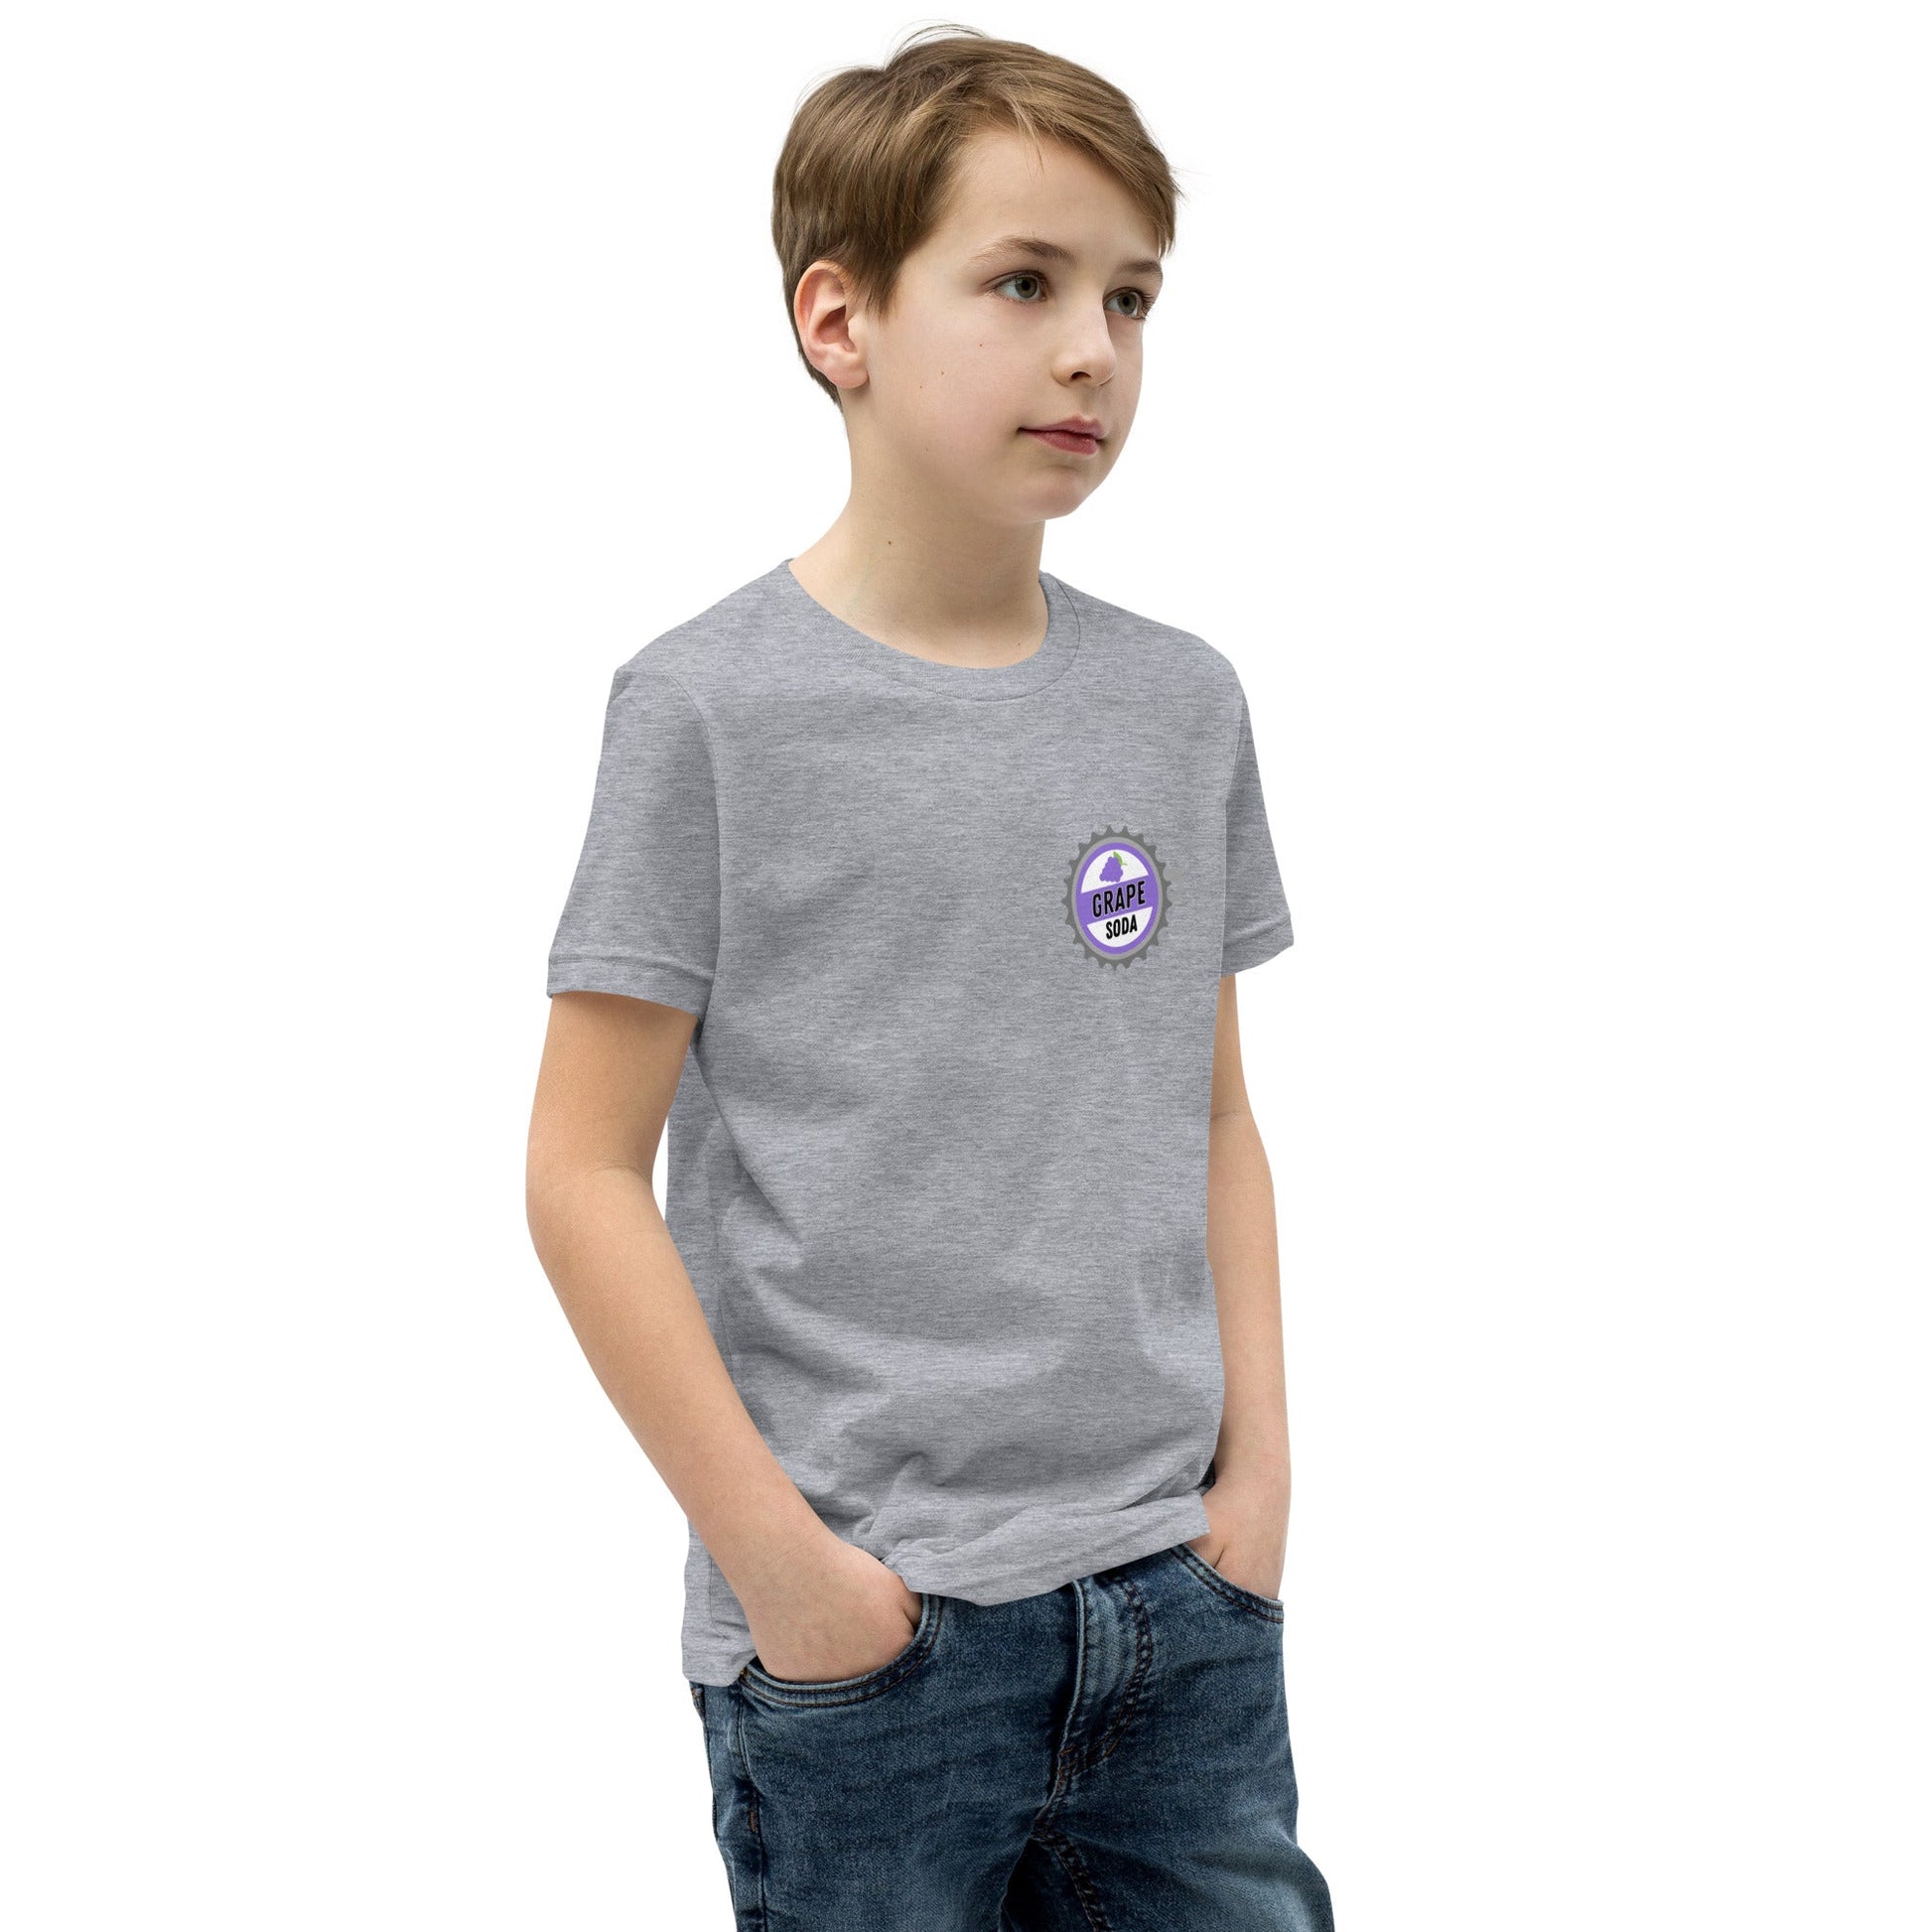 Grape Soda Youth Short Sleeve T-Shirt 100 years of wondercoordinating family outfitsdisney gift#tag4##tag5##tag6#